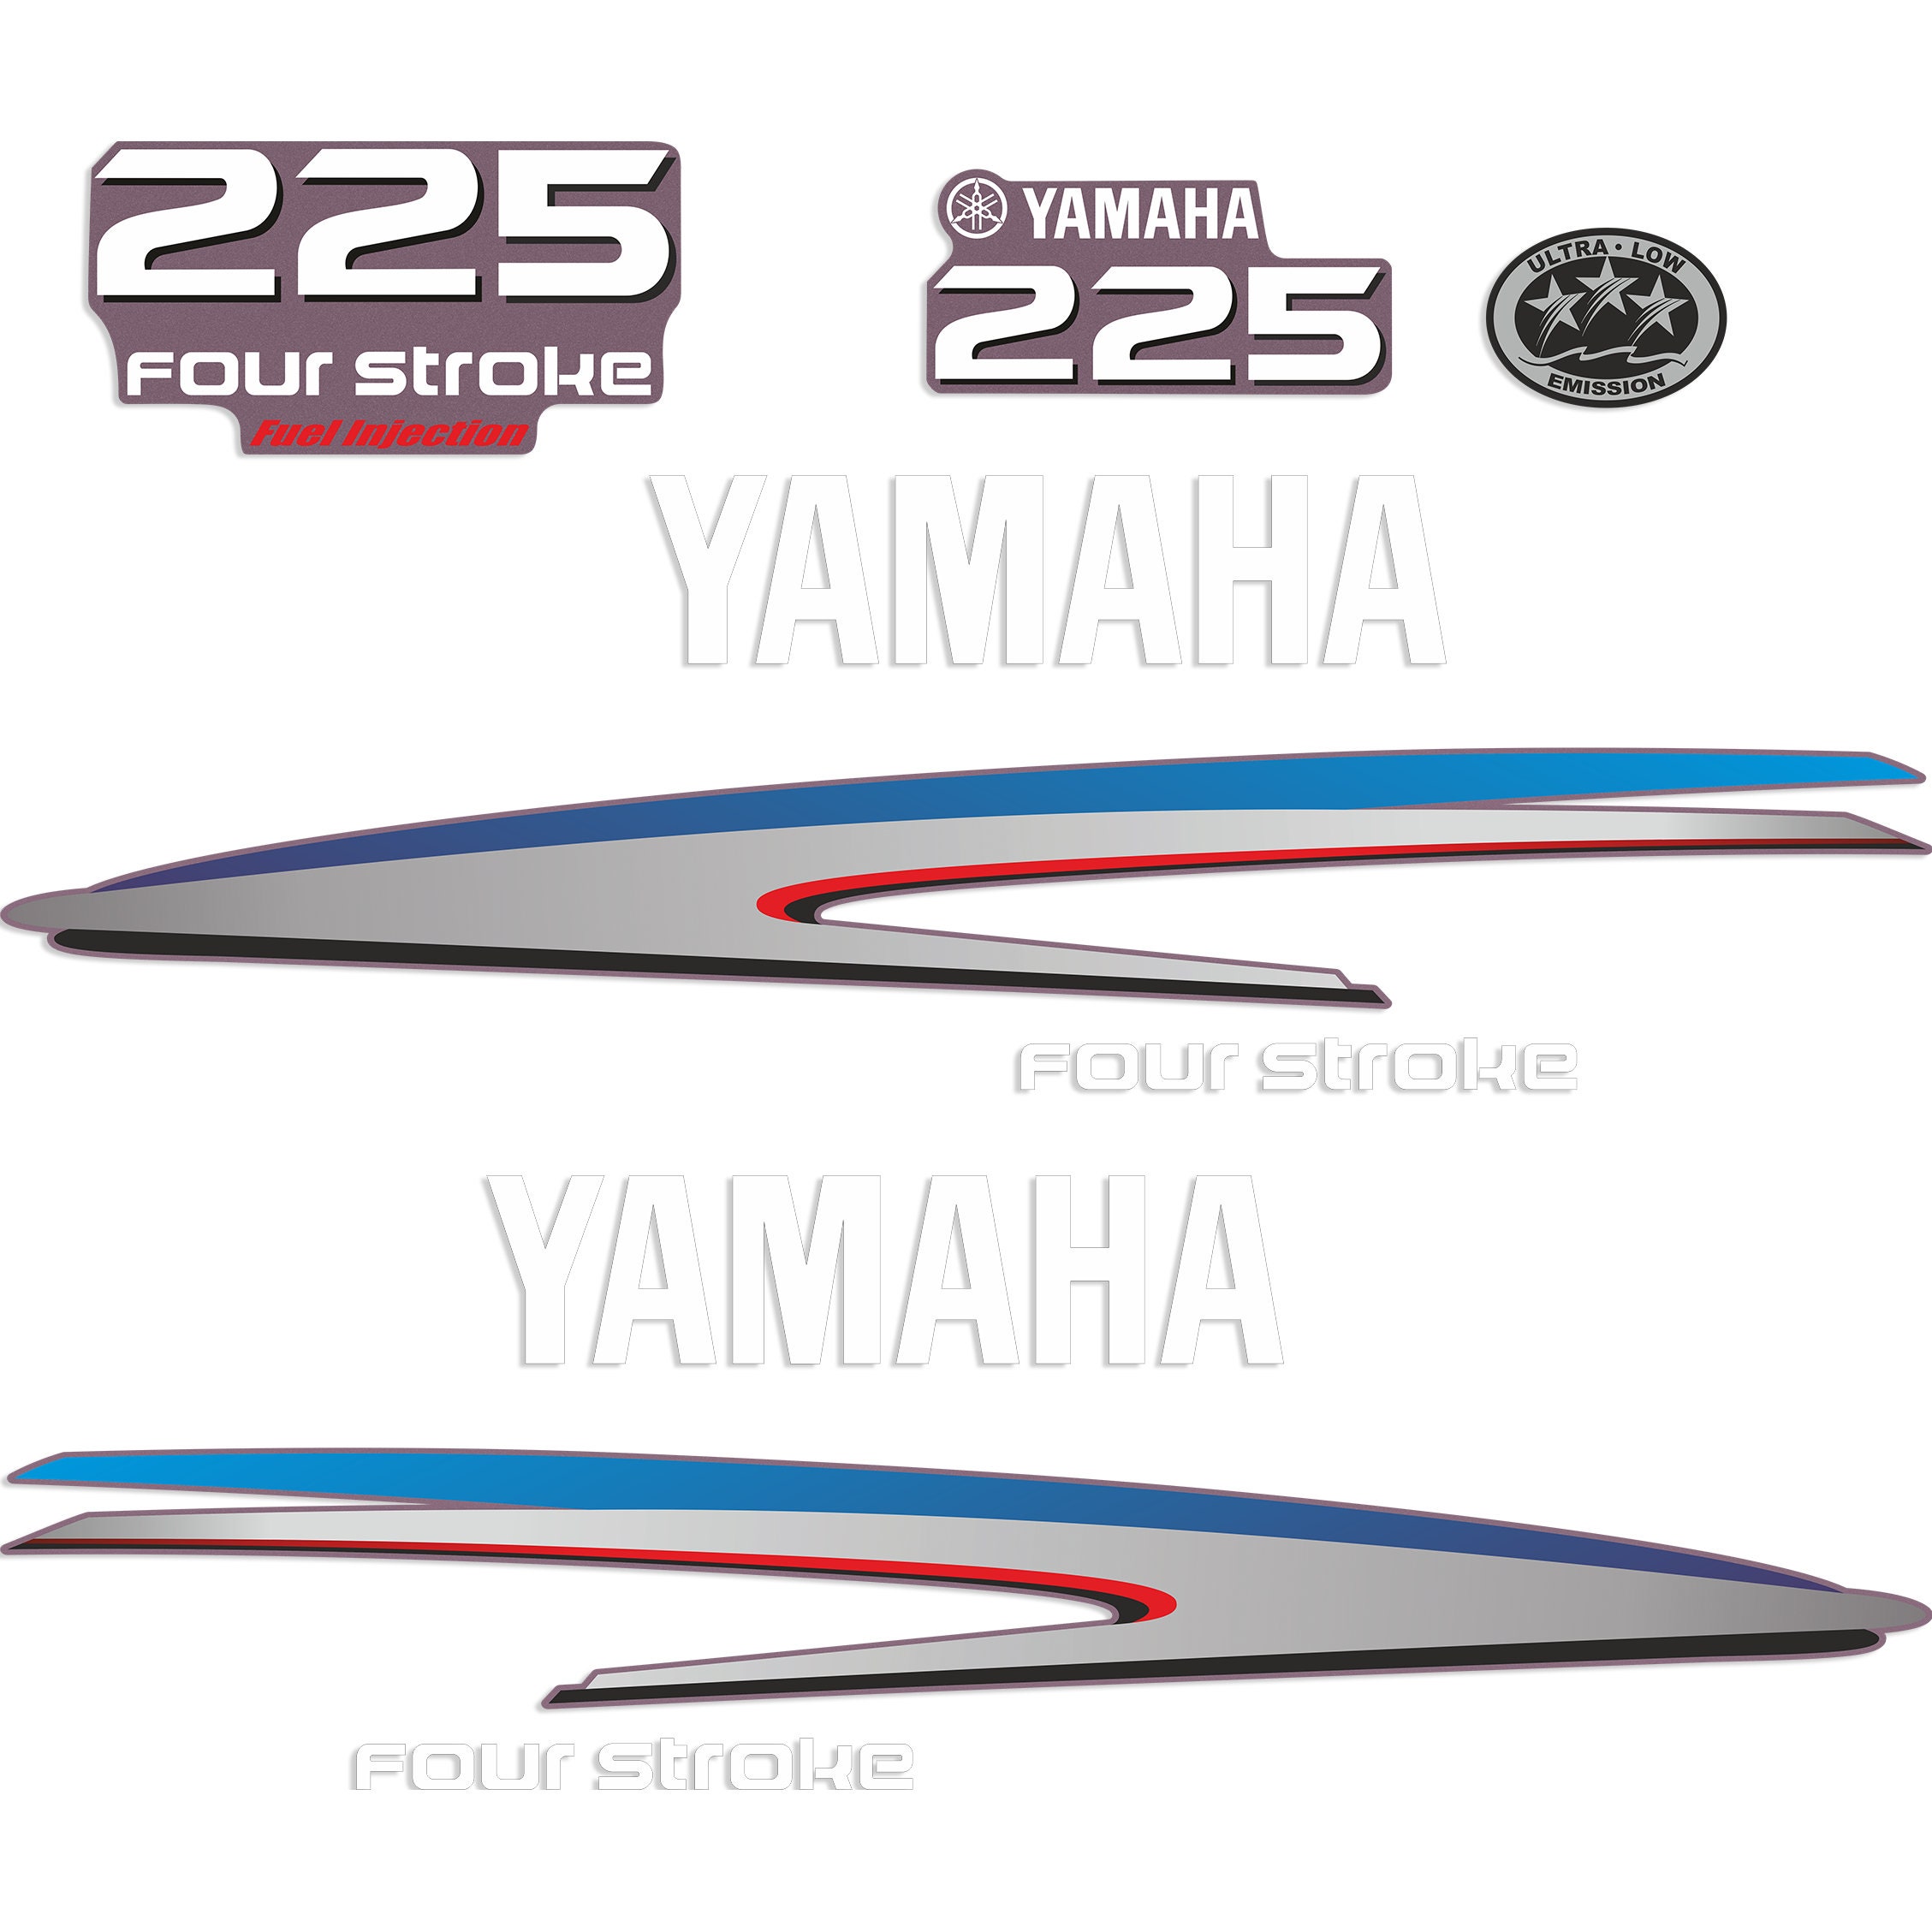 Destello Barbero sonido Yamaha 225 HP Four Stroke Outboard Engine Decals Sticker Set - Etsy